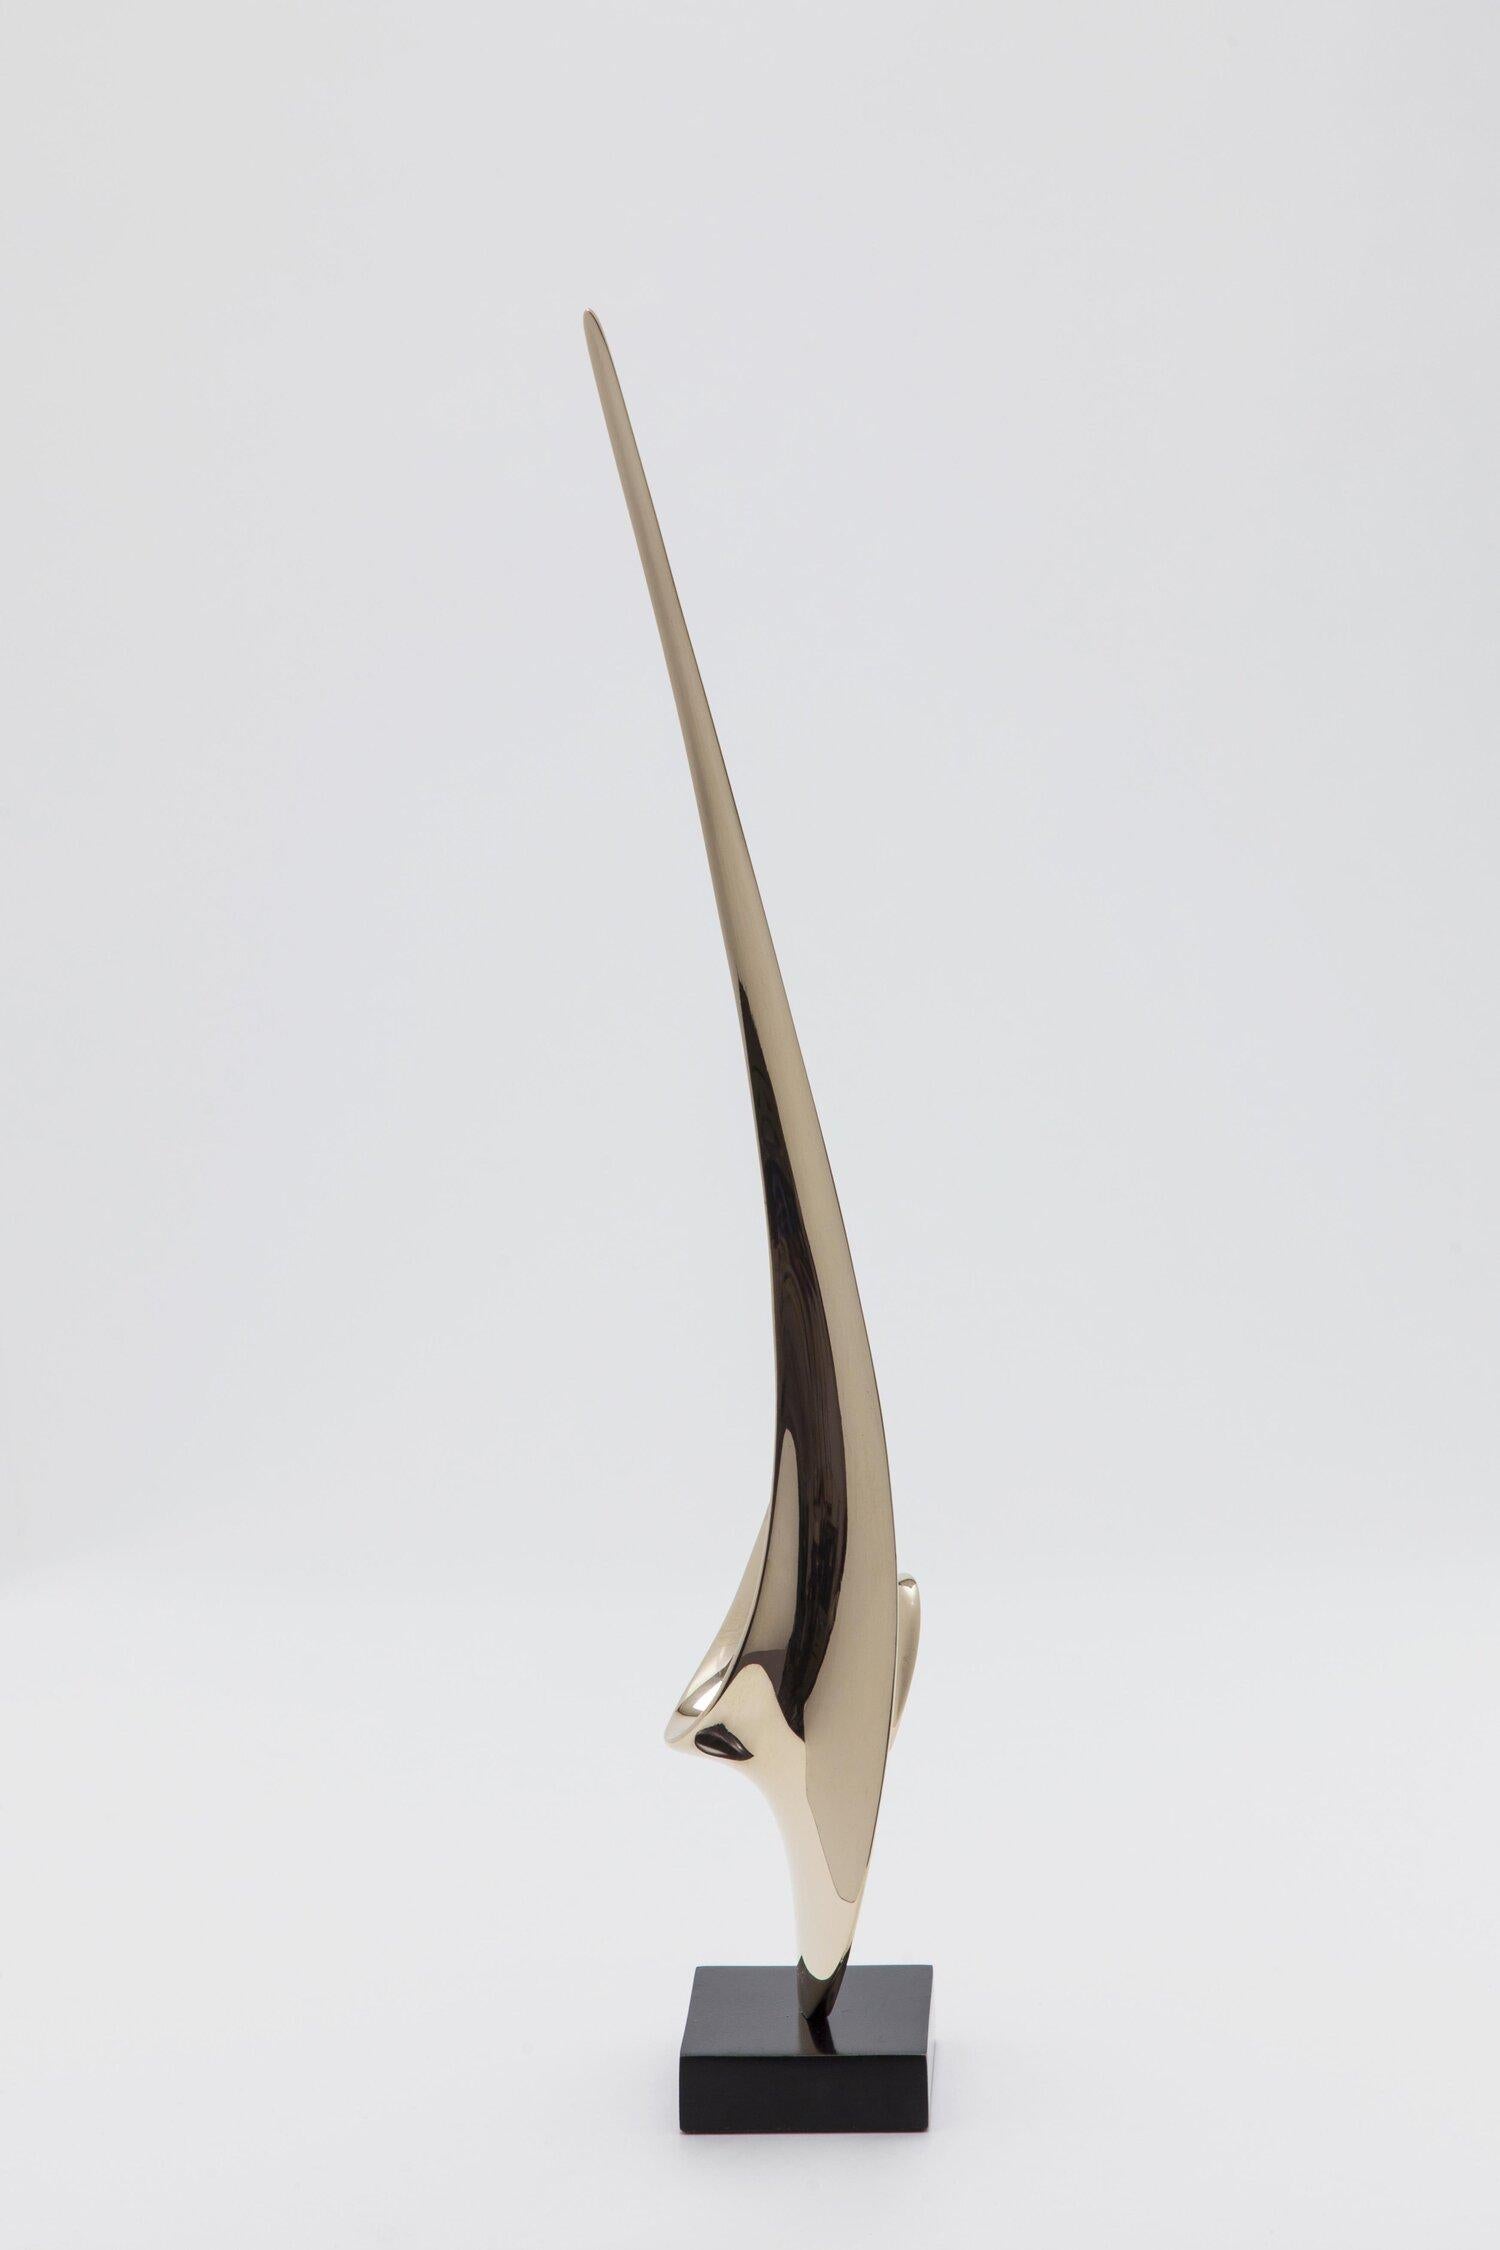 Unfurling Maquette - Abstract Geometric Sculpture by Hugh Chapman